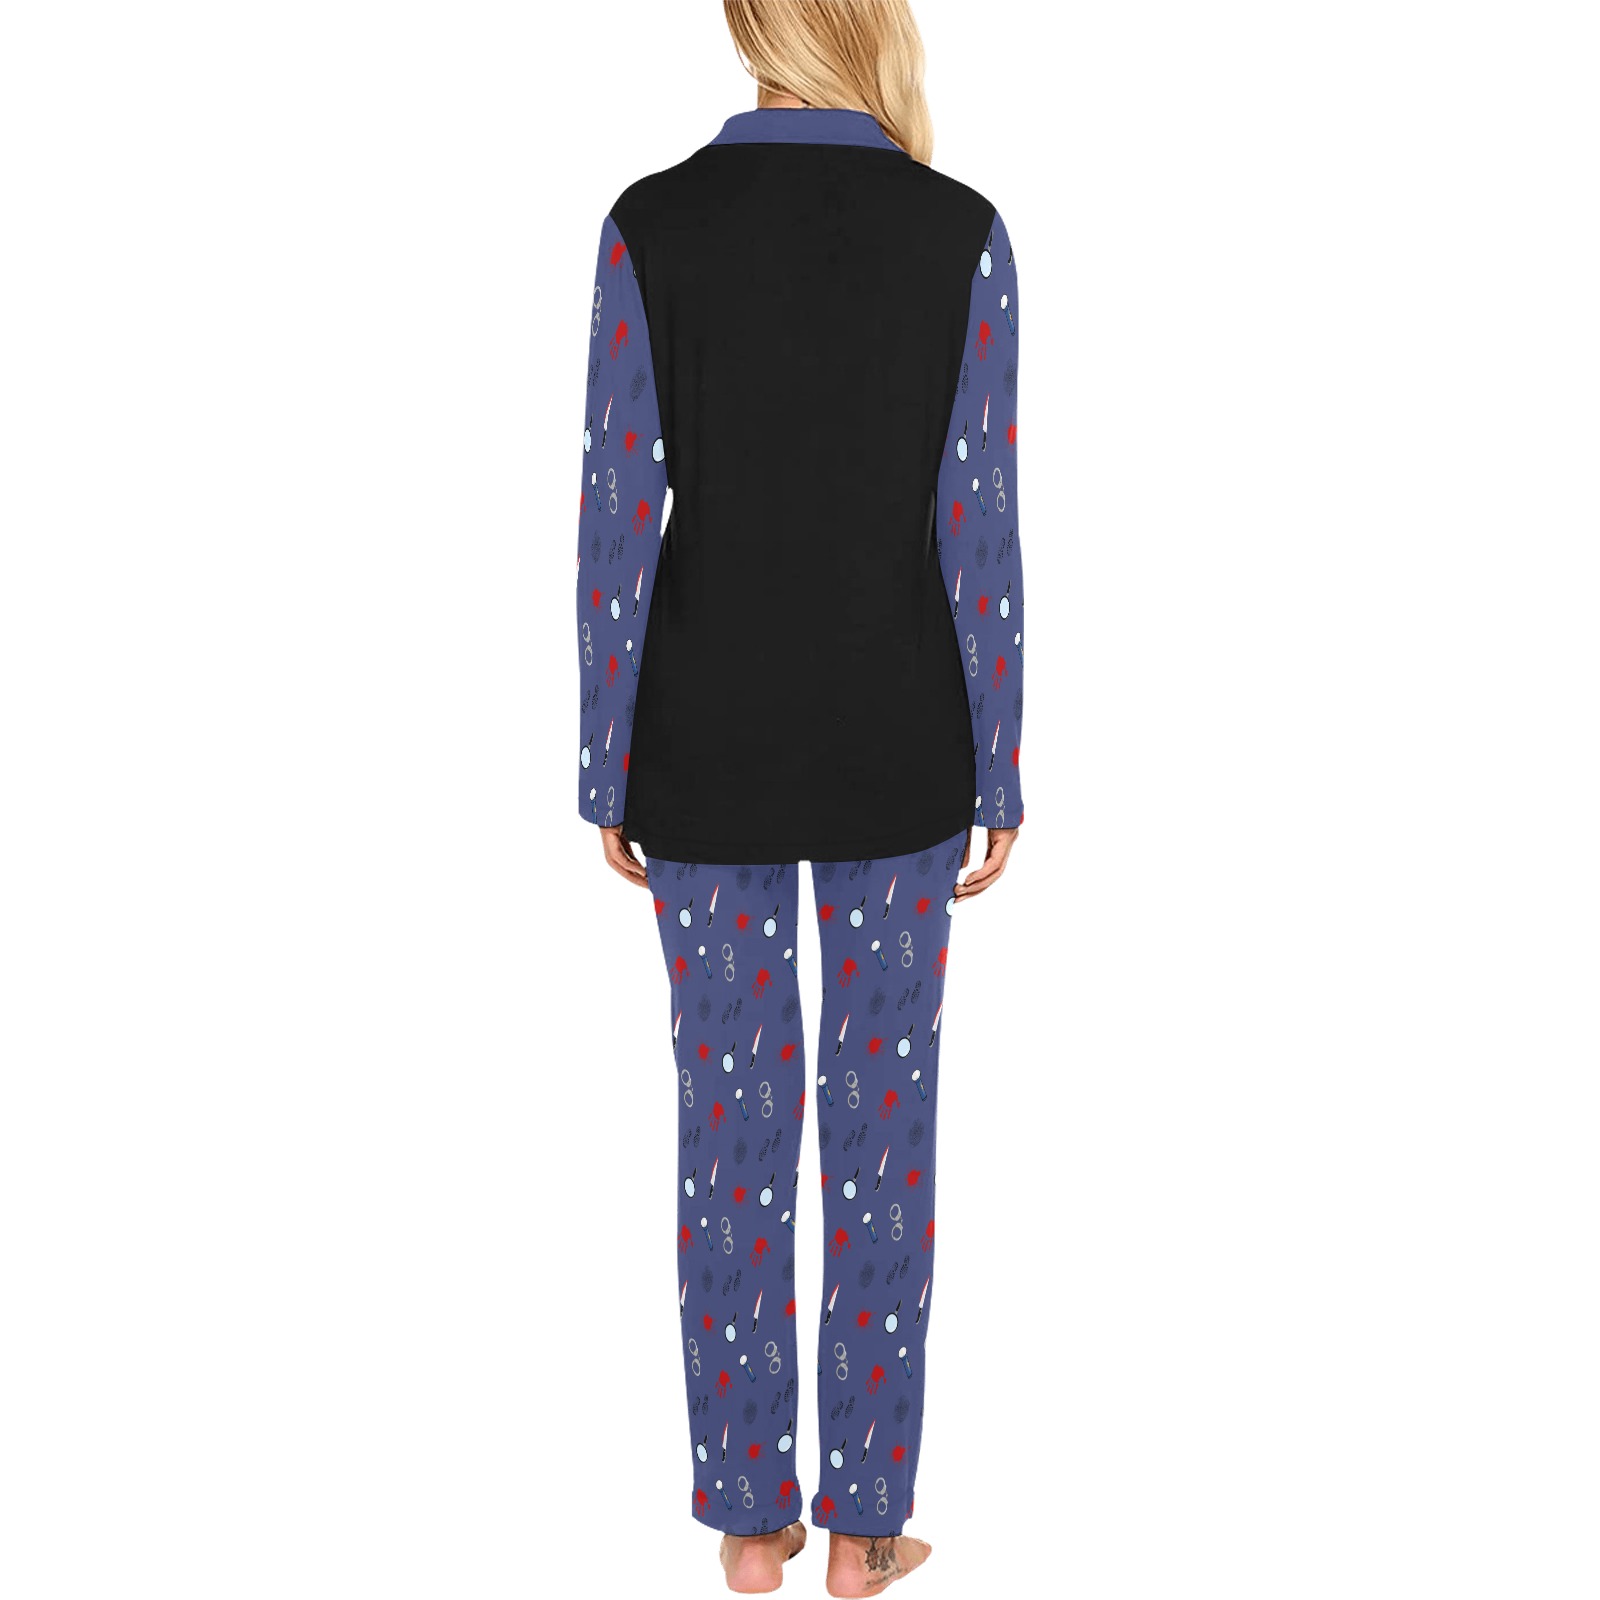 True Crime Junkie Blue Jammies Women's Long Pajama Set